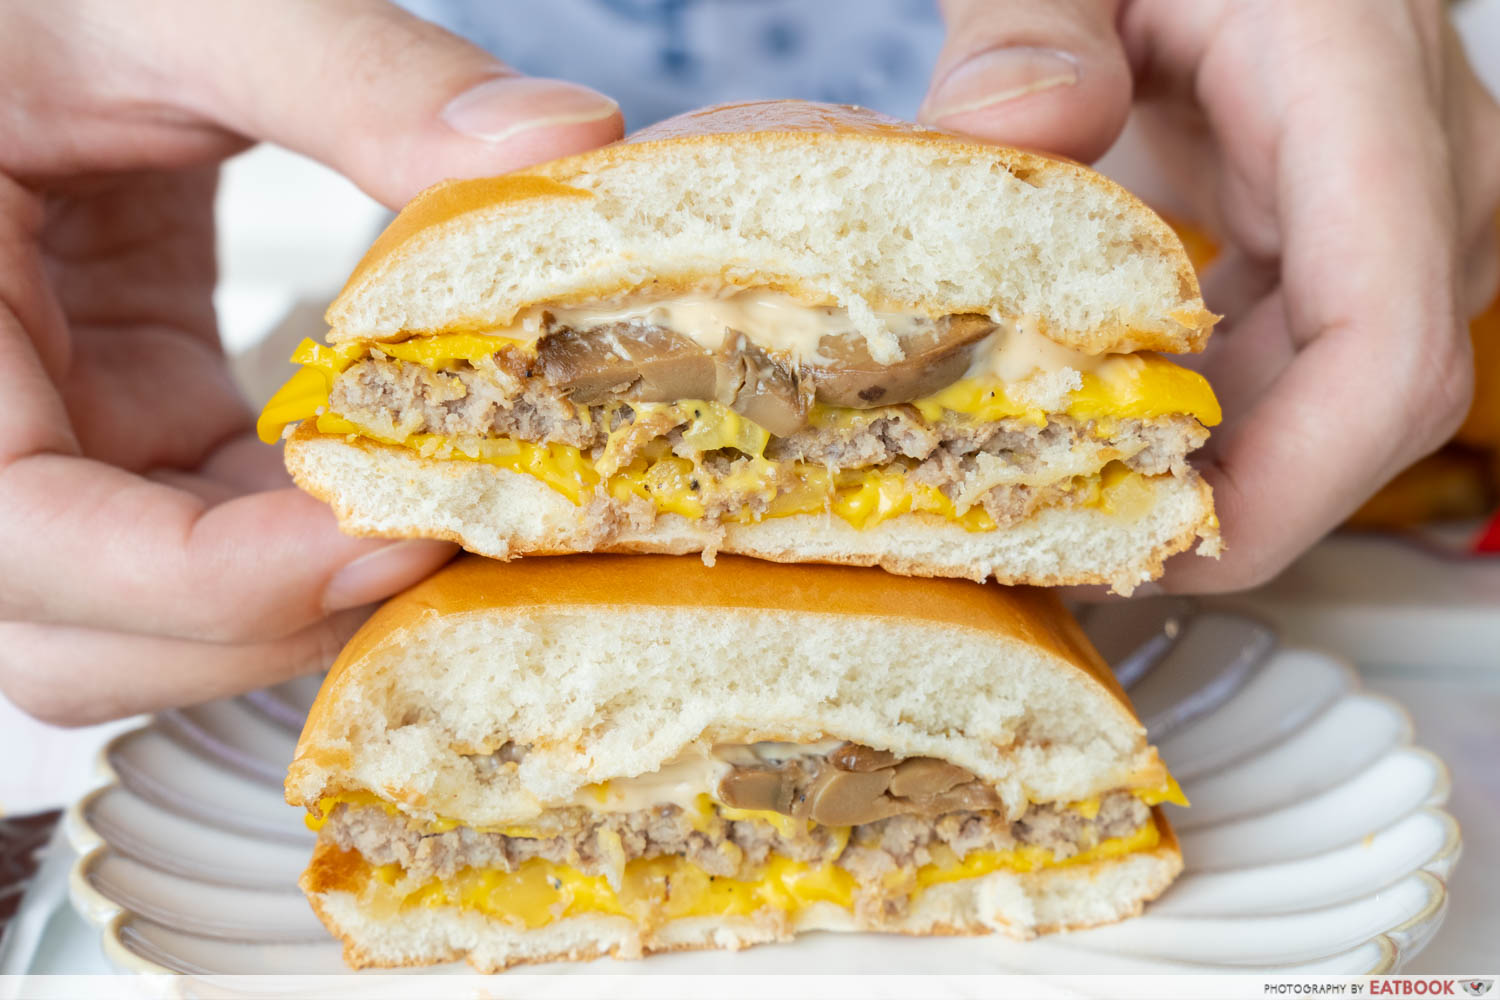 mcdonalds-creamy-mushroom-double-cheeseburger